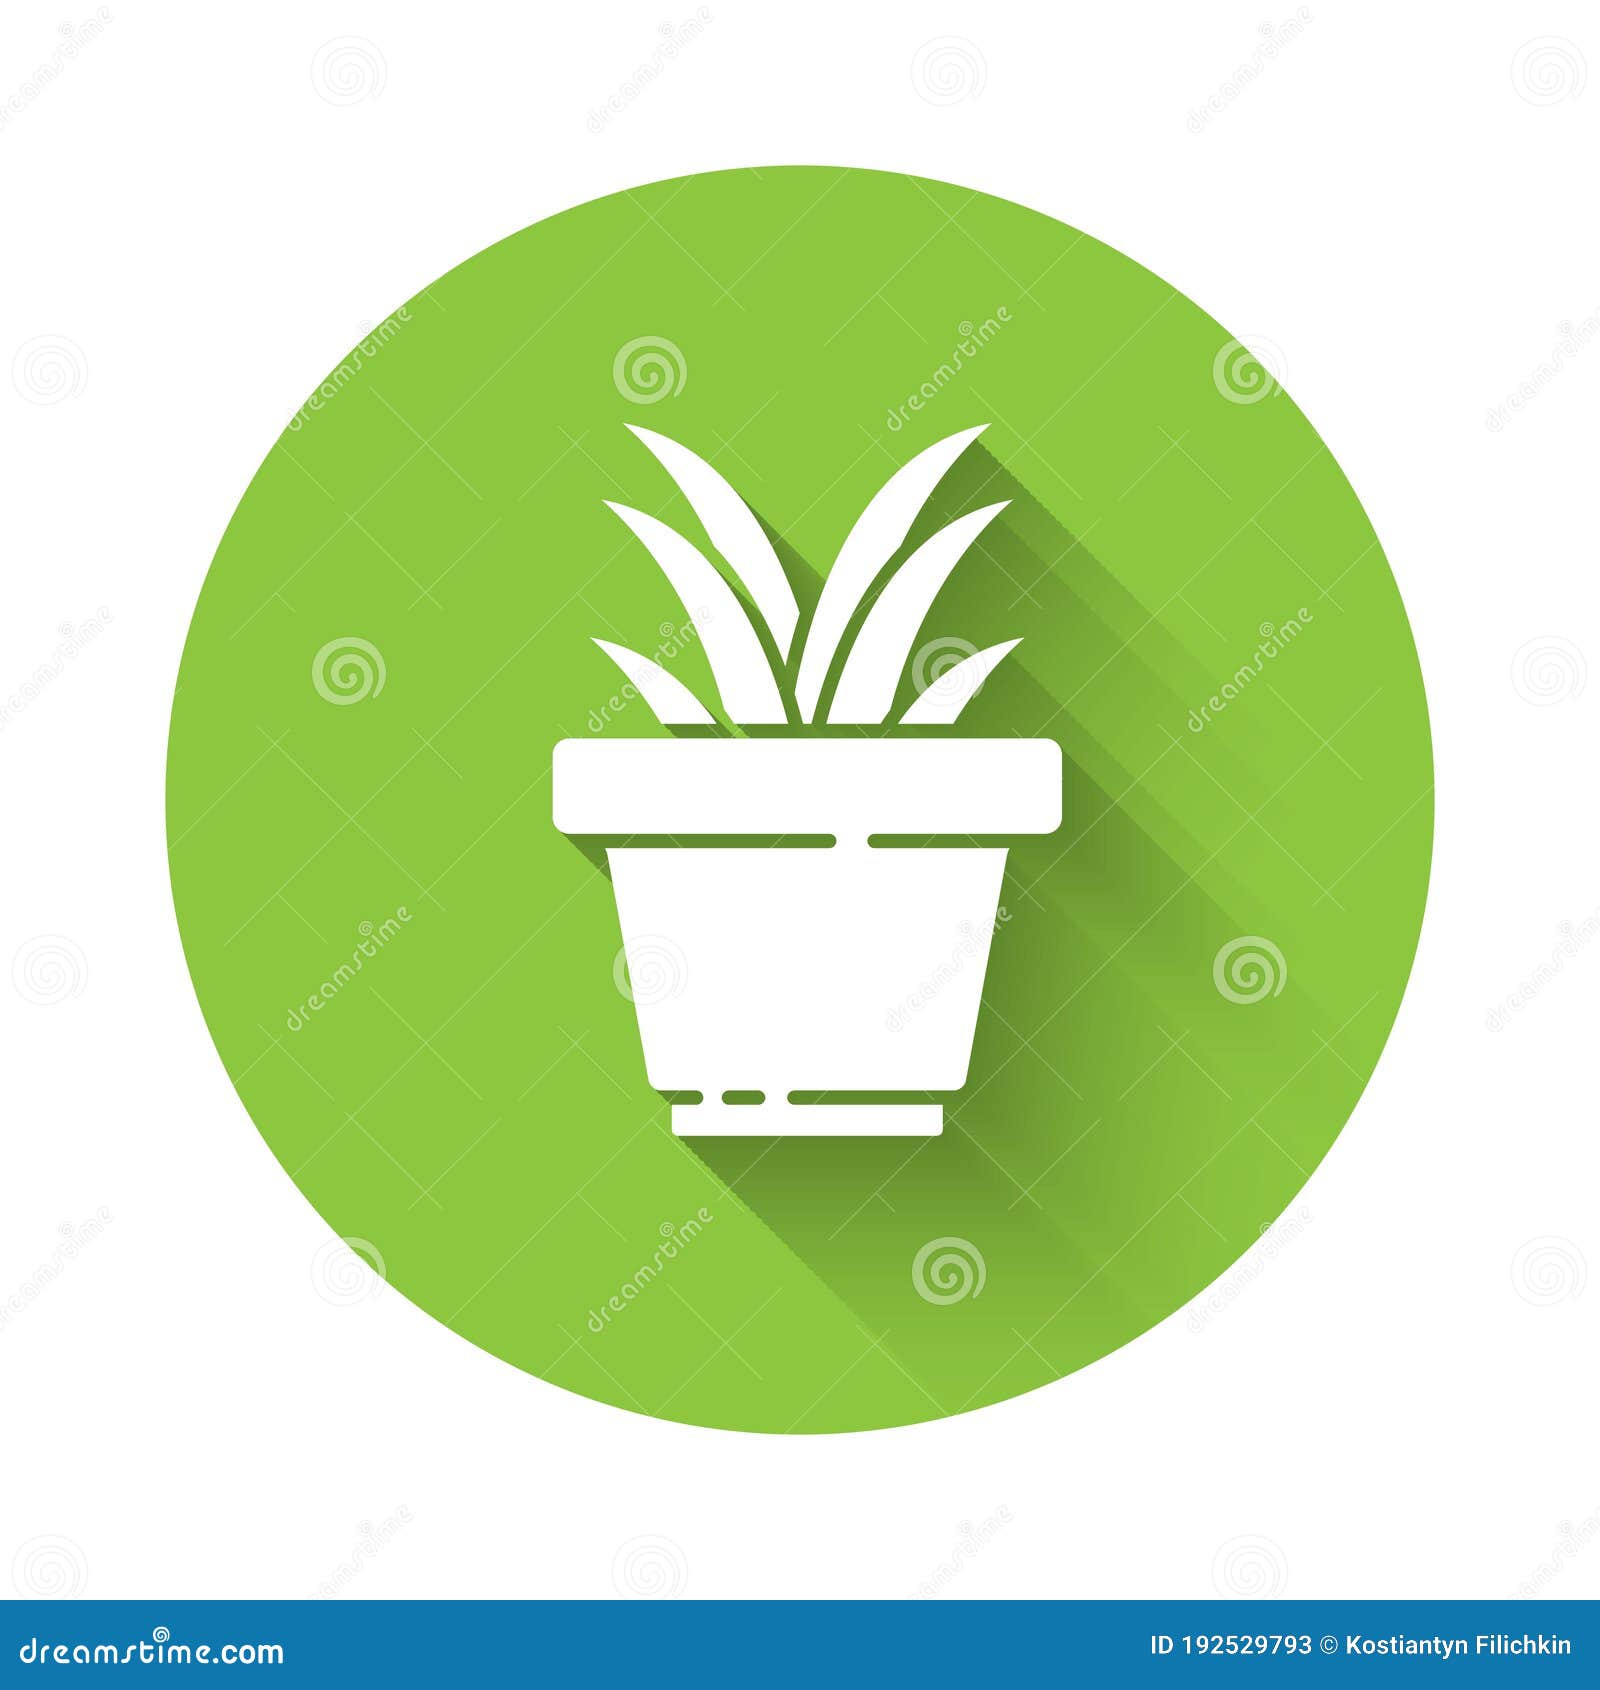 Premium Vector  Illustration of cute cartoon blue mandrake root in flower  pot